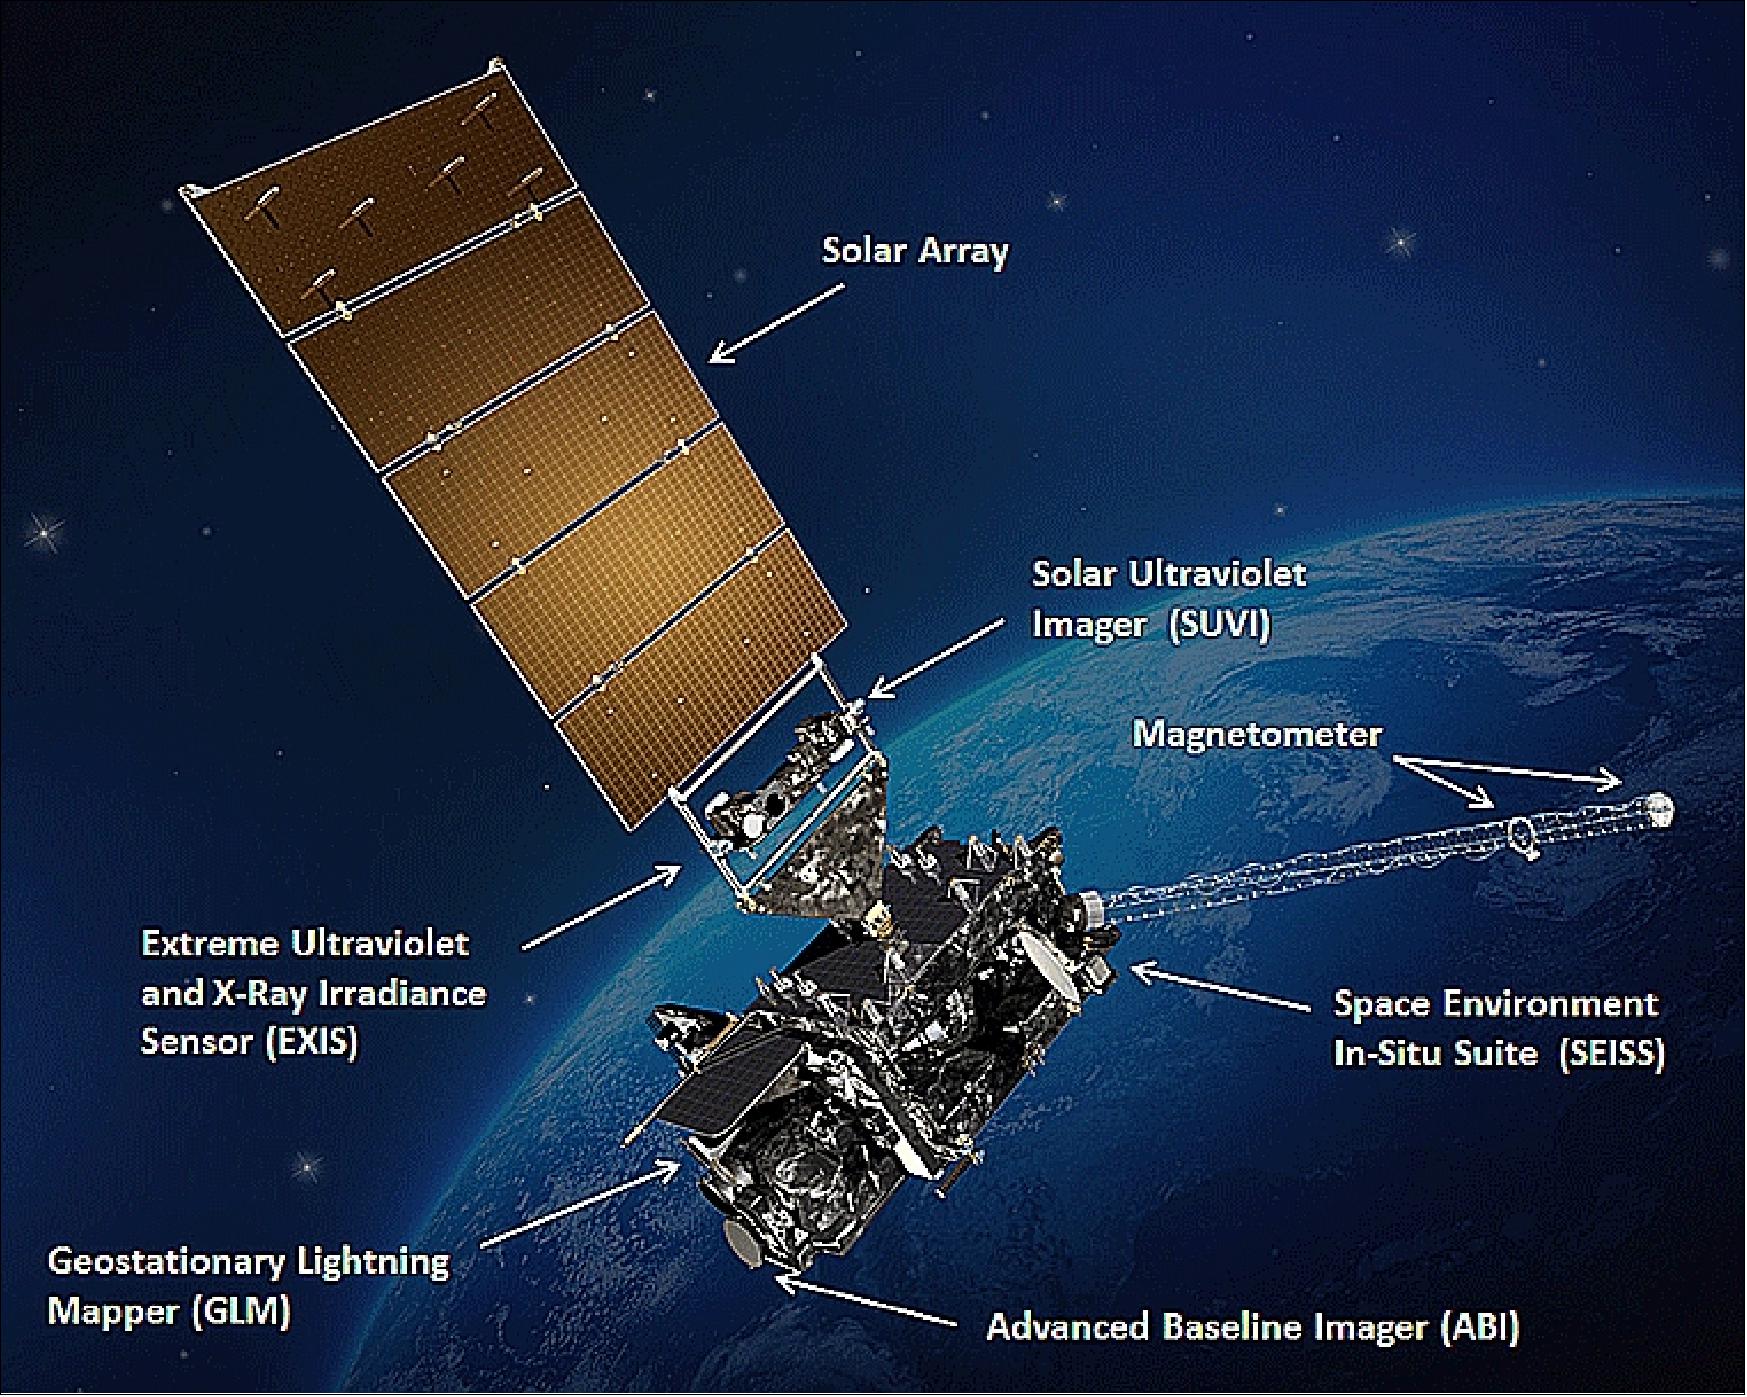 Figure 2: Artist's view of the GOES-R spacecraft in orbit (image credit: NASA, NOAA, LM)